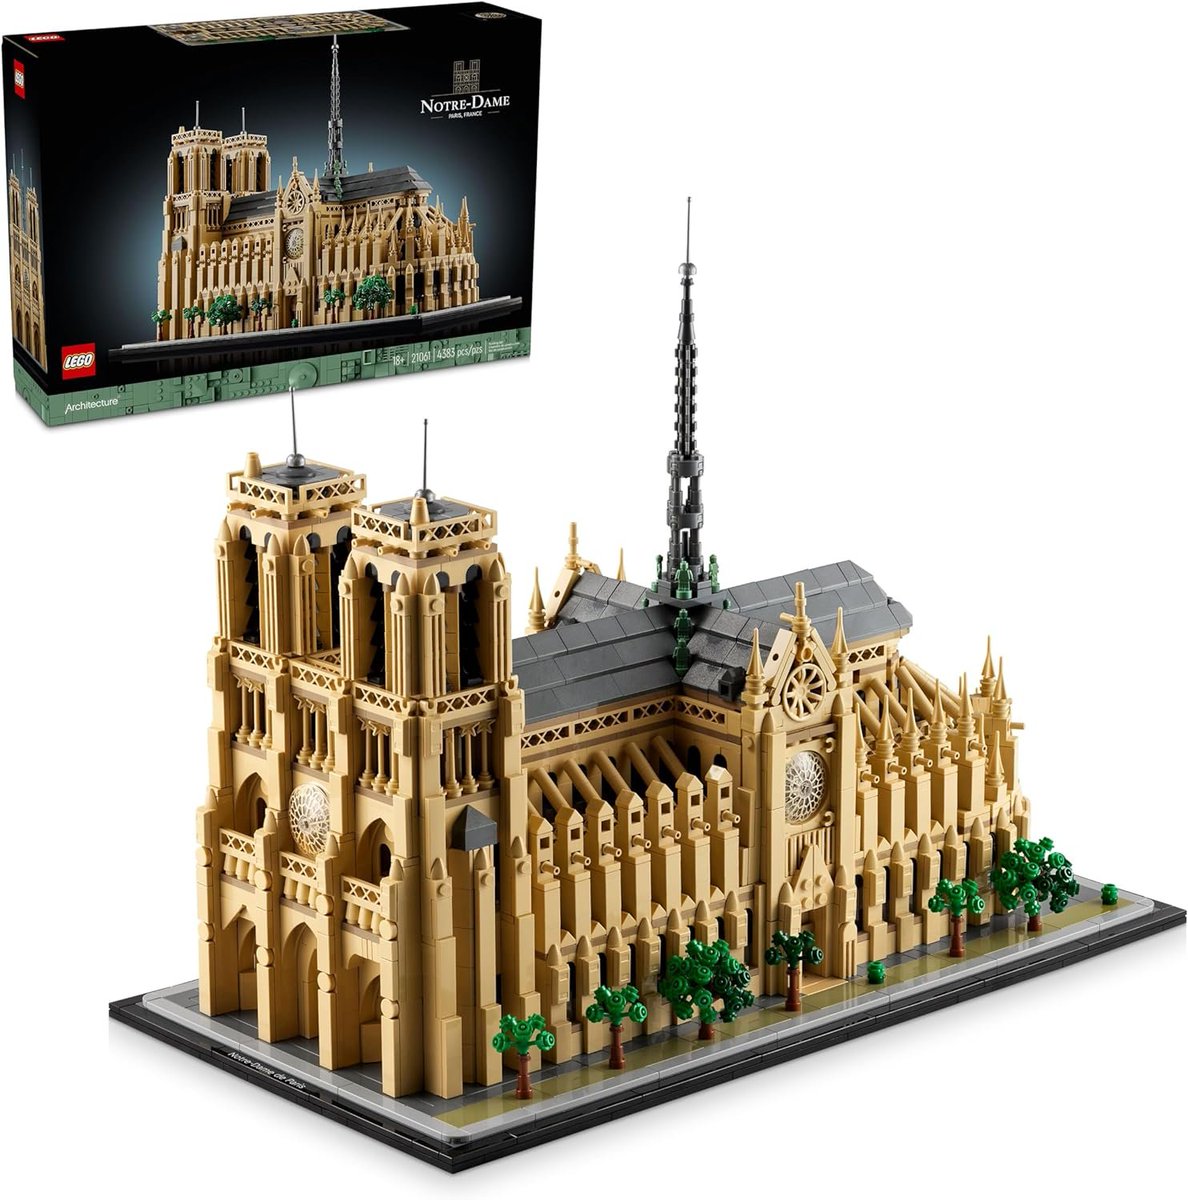 Preorder Now: LEGO Architecture Notre-Dame de Paris Replica, Architectural Model Kit on Amazon 

Link: amzn.to/3QzpeWc

* No Charge Until it Ships

#Ad #LEGO #NotreDame #NotreDamedeParis #Collectibles #FunkoFinderz